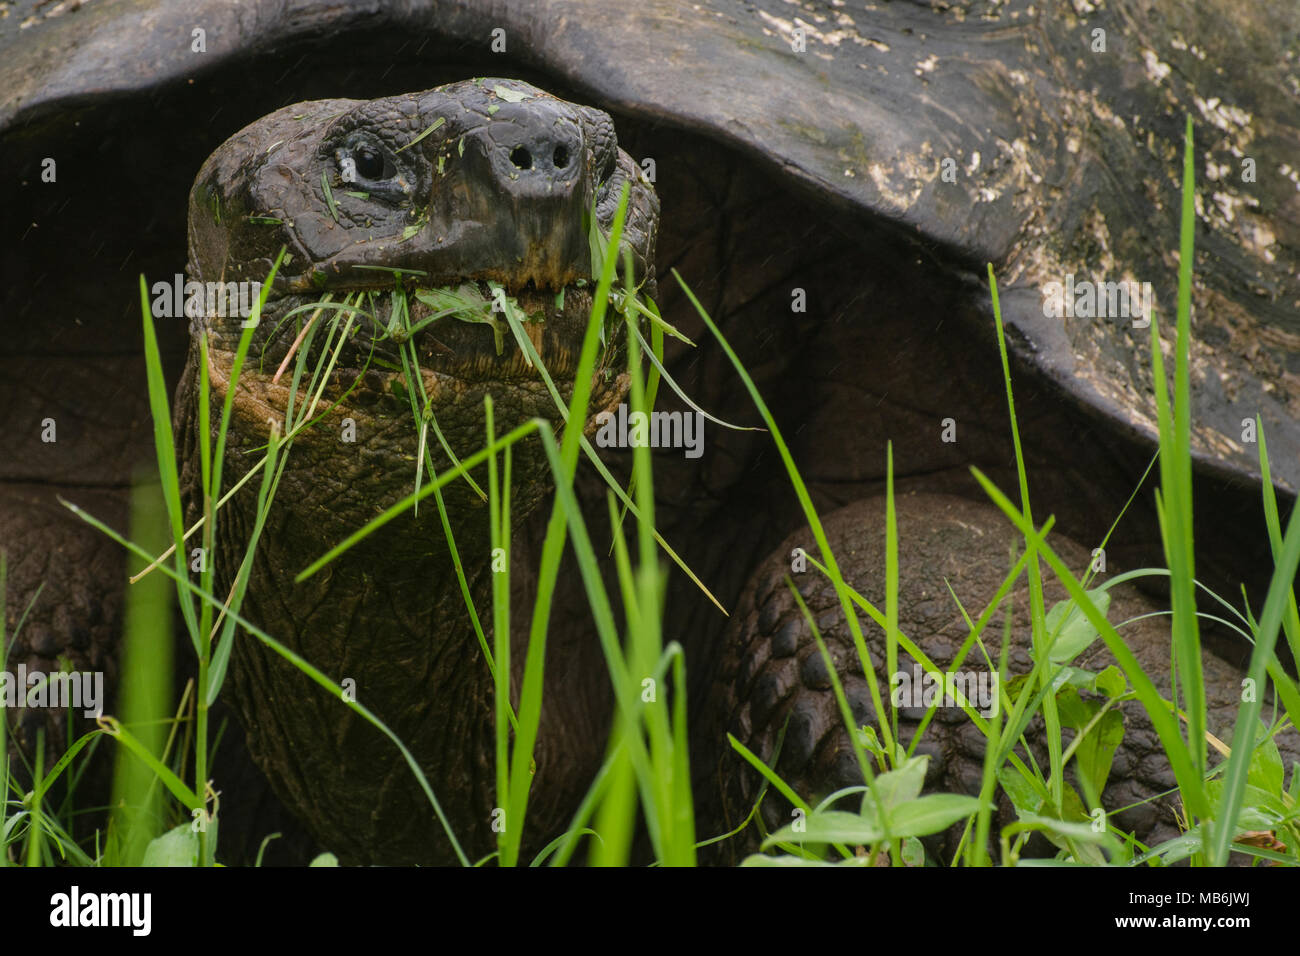 A galapagos giant tortoise (Chelonoidis nigra) munching on grass, these reptiles reach huge sizes, an example of island gigantism. Stock Photo